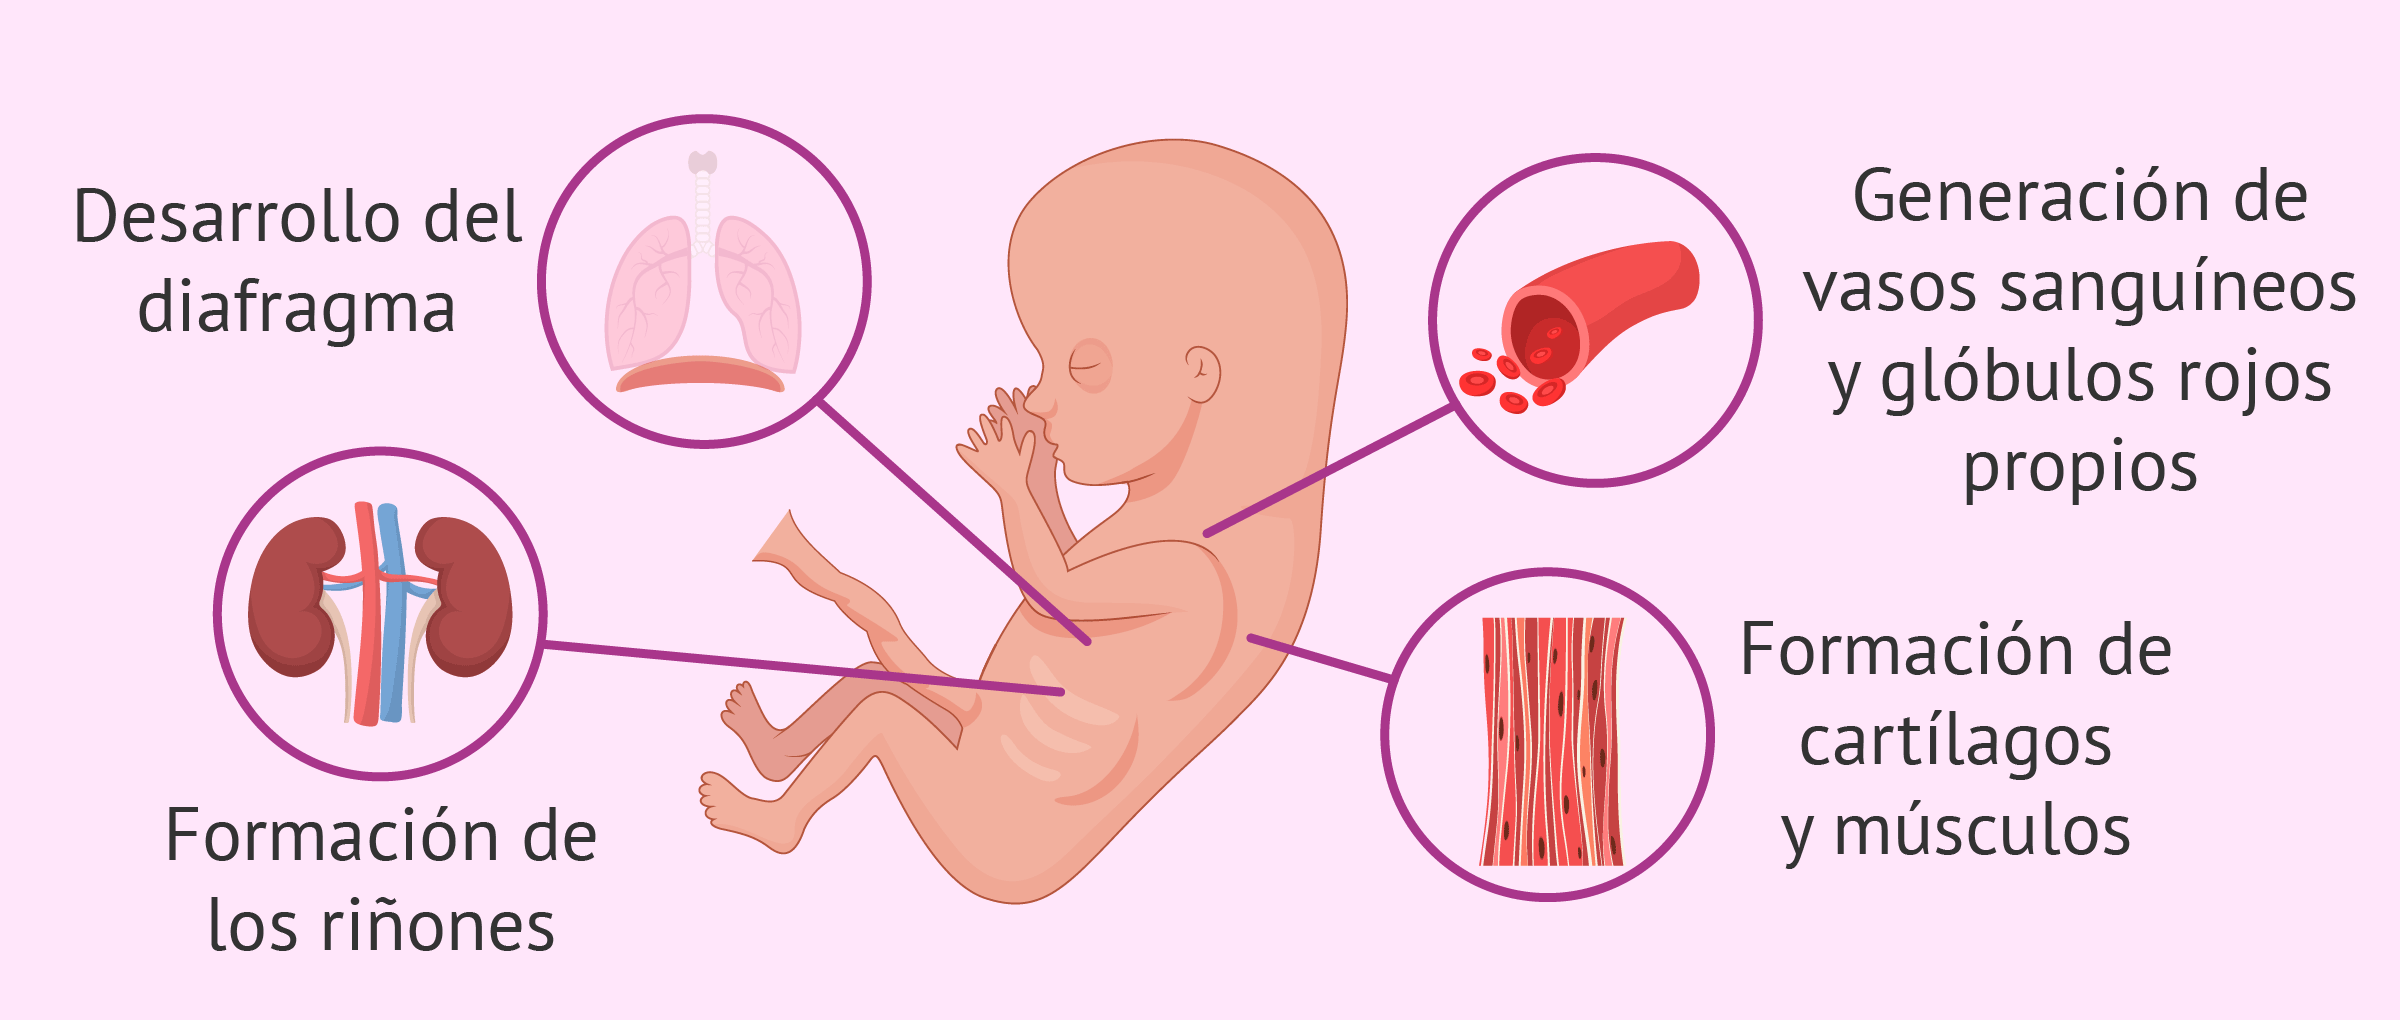 Semana 11 embarazo: los disminuyen